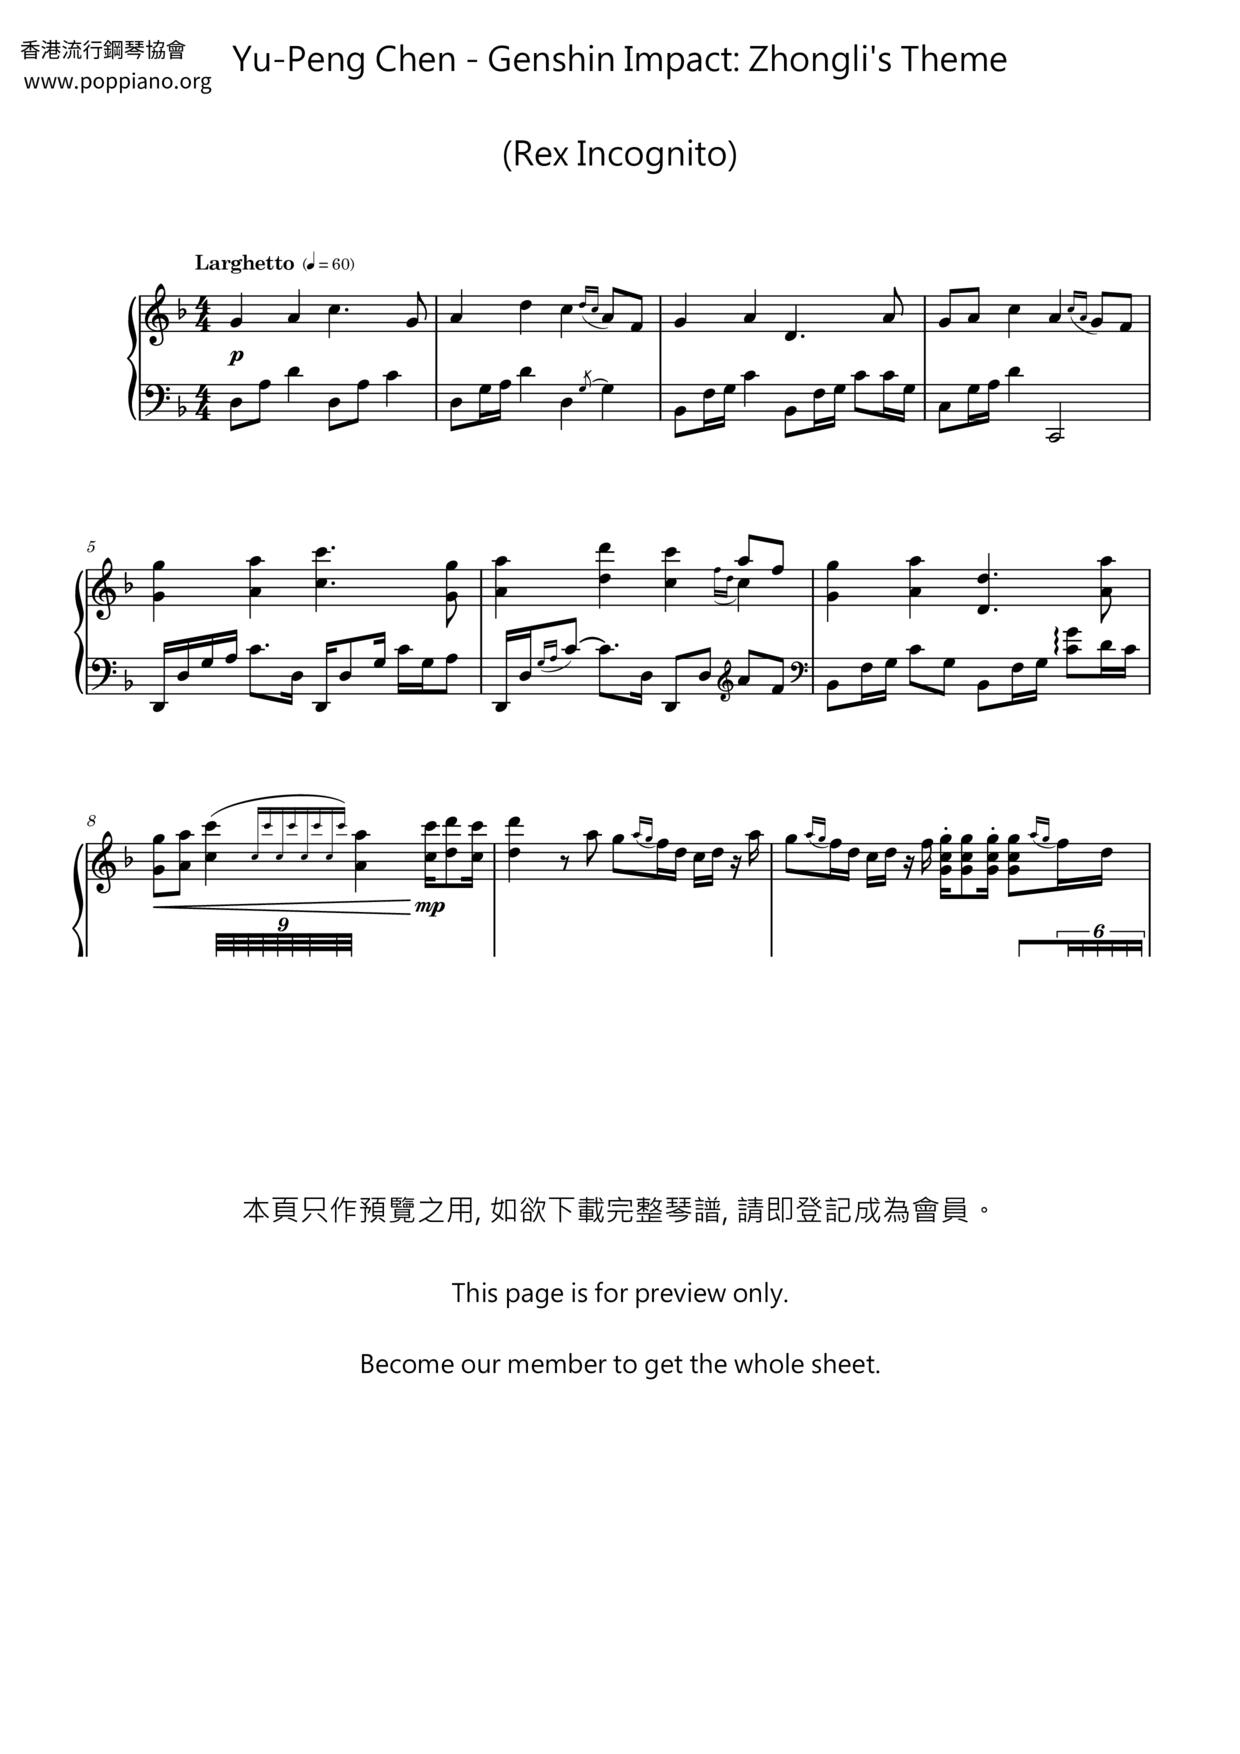 Genshin Impact: Zhongli's Theme (Rex Incognito)琴譜